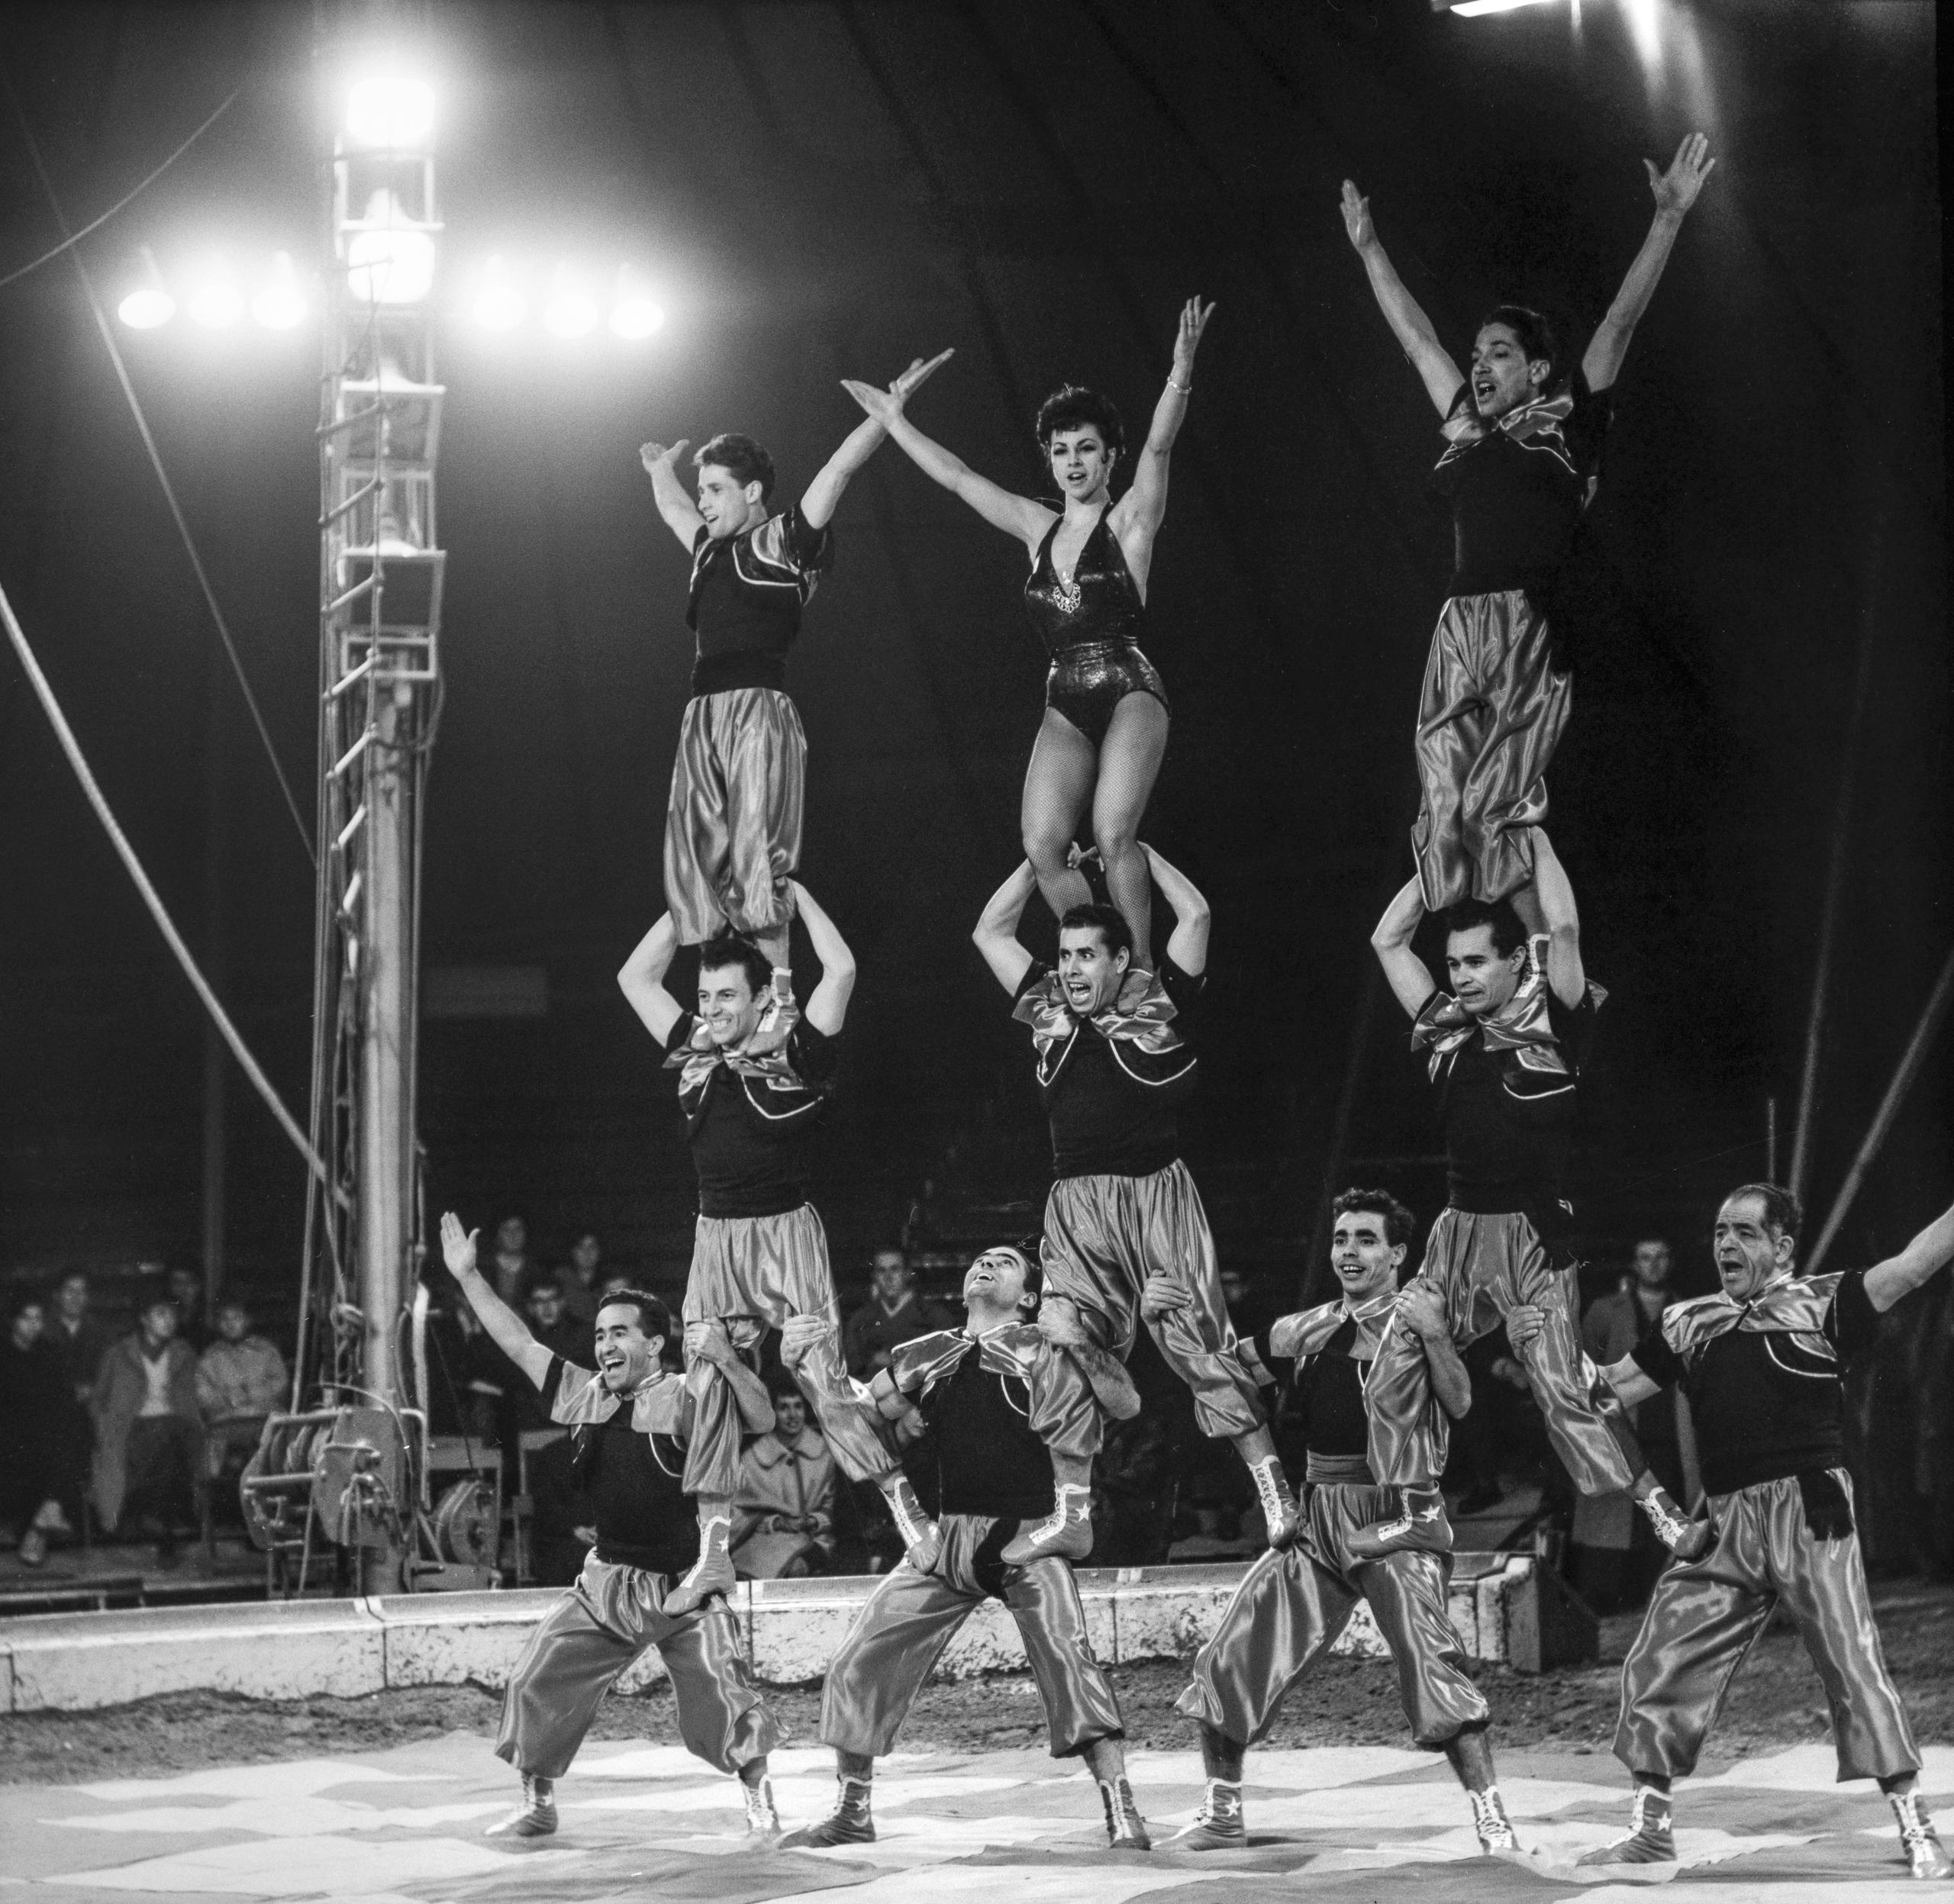 Ten performers form a human pyramid